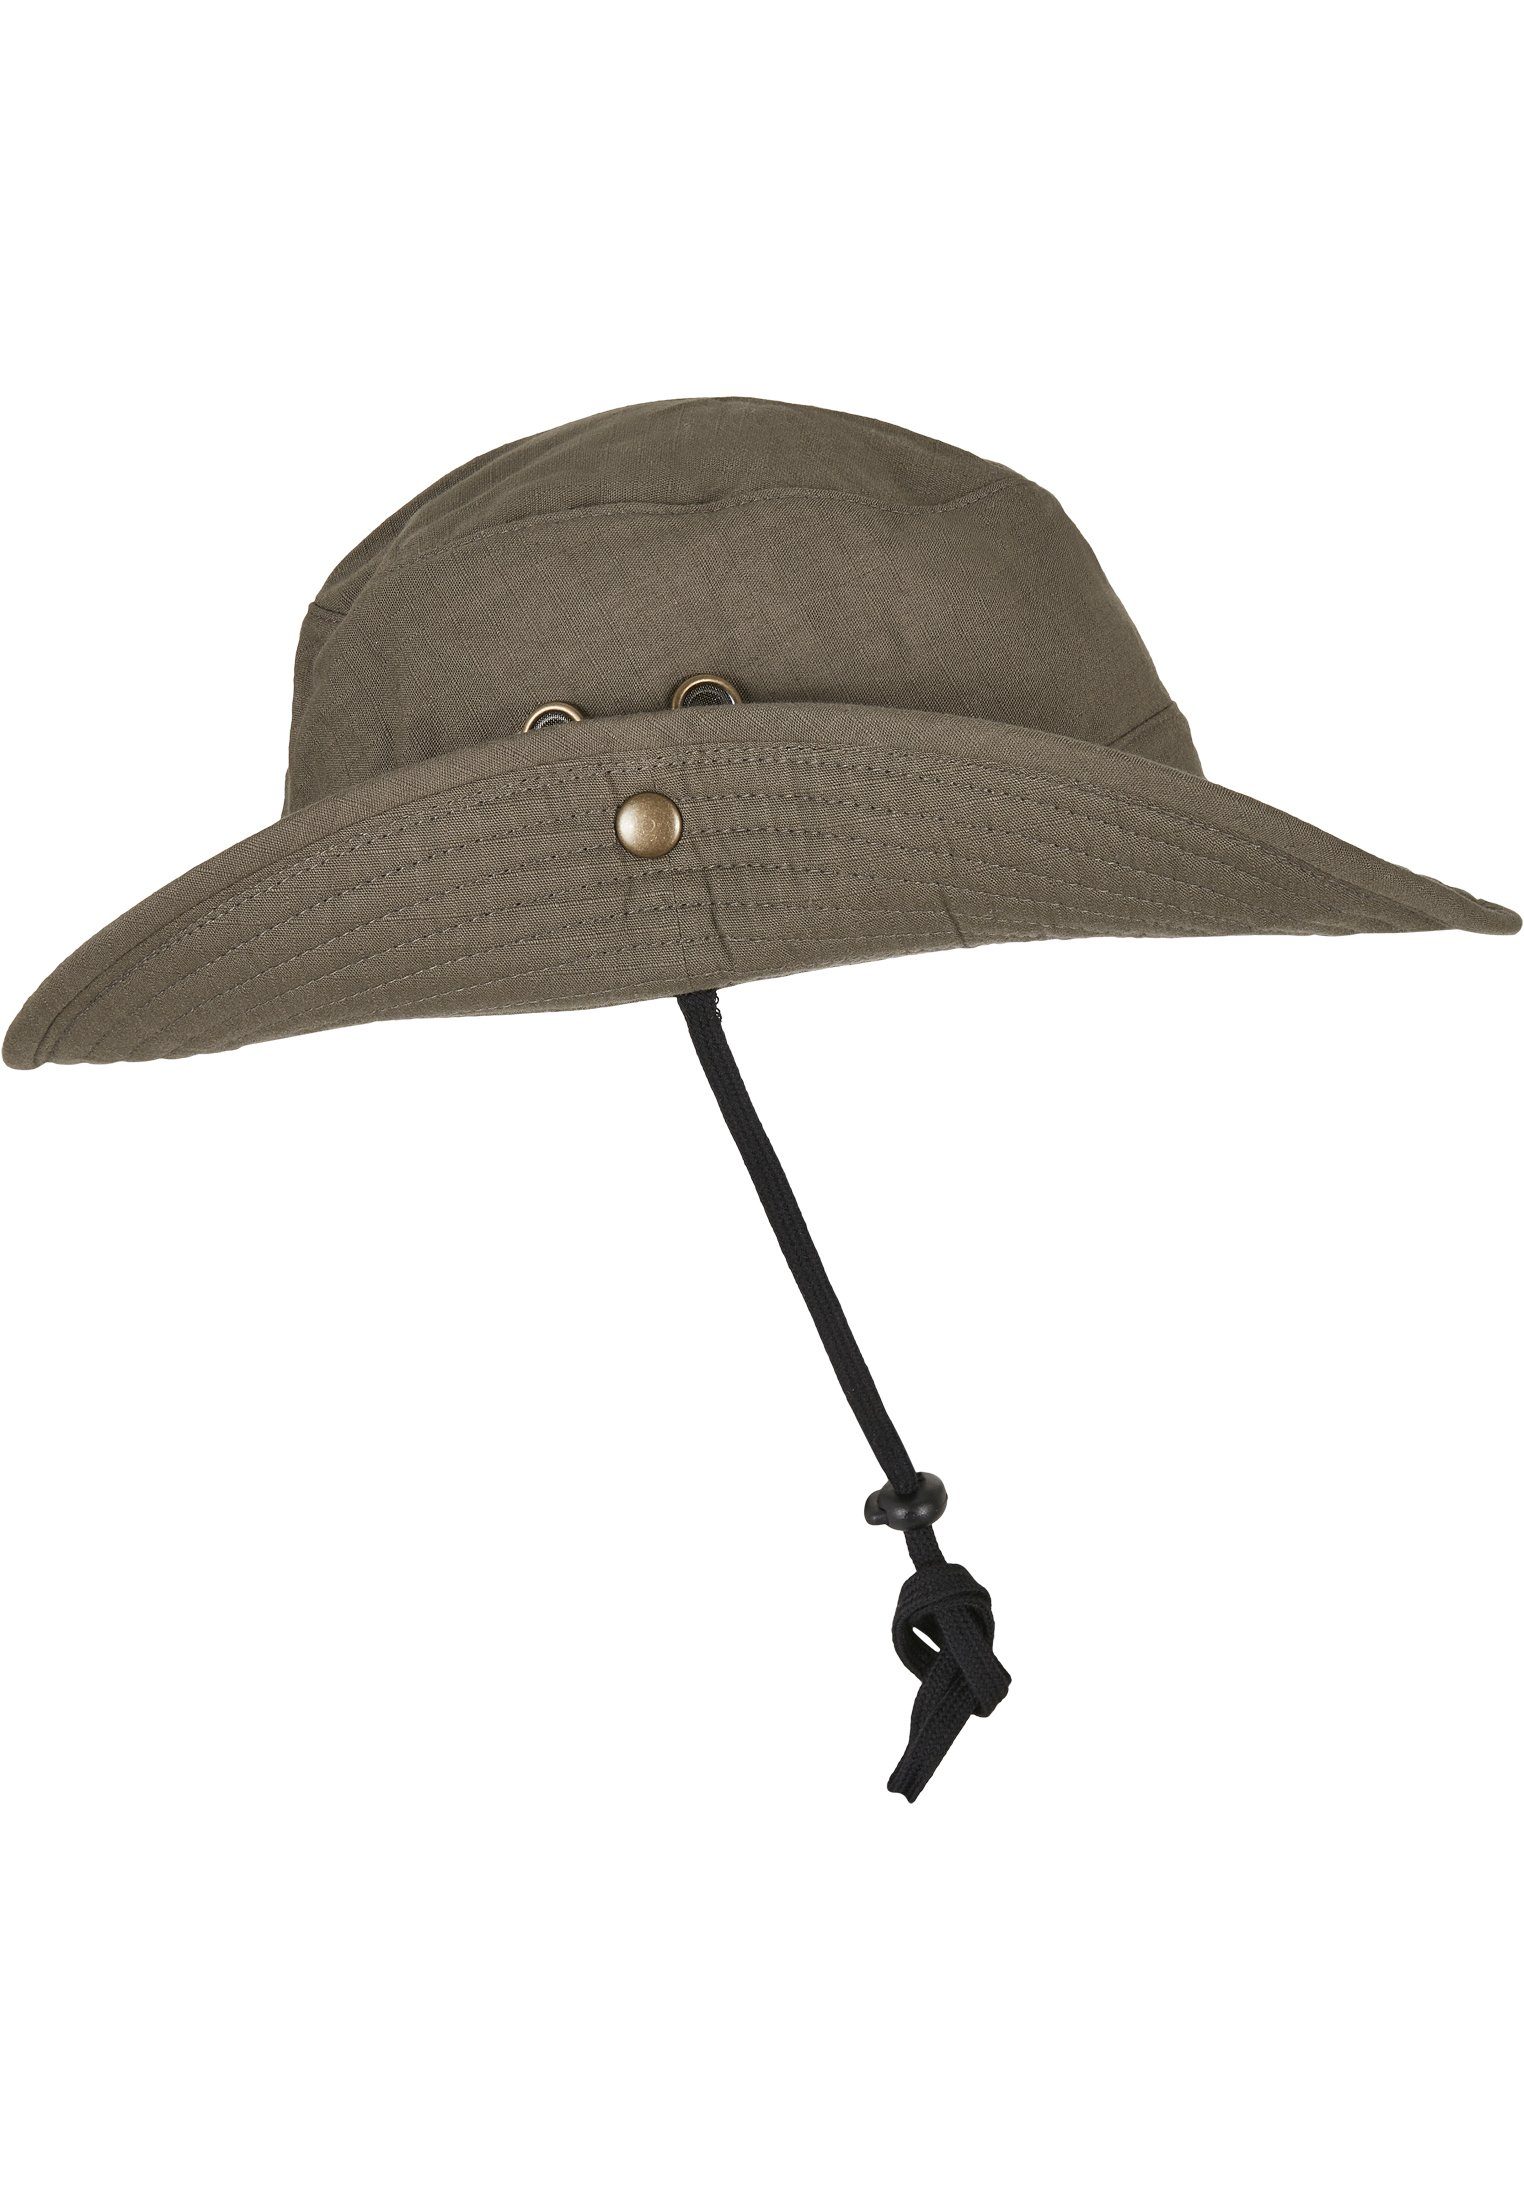 Flexfit Flex Cap Angler darkolive Hat